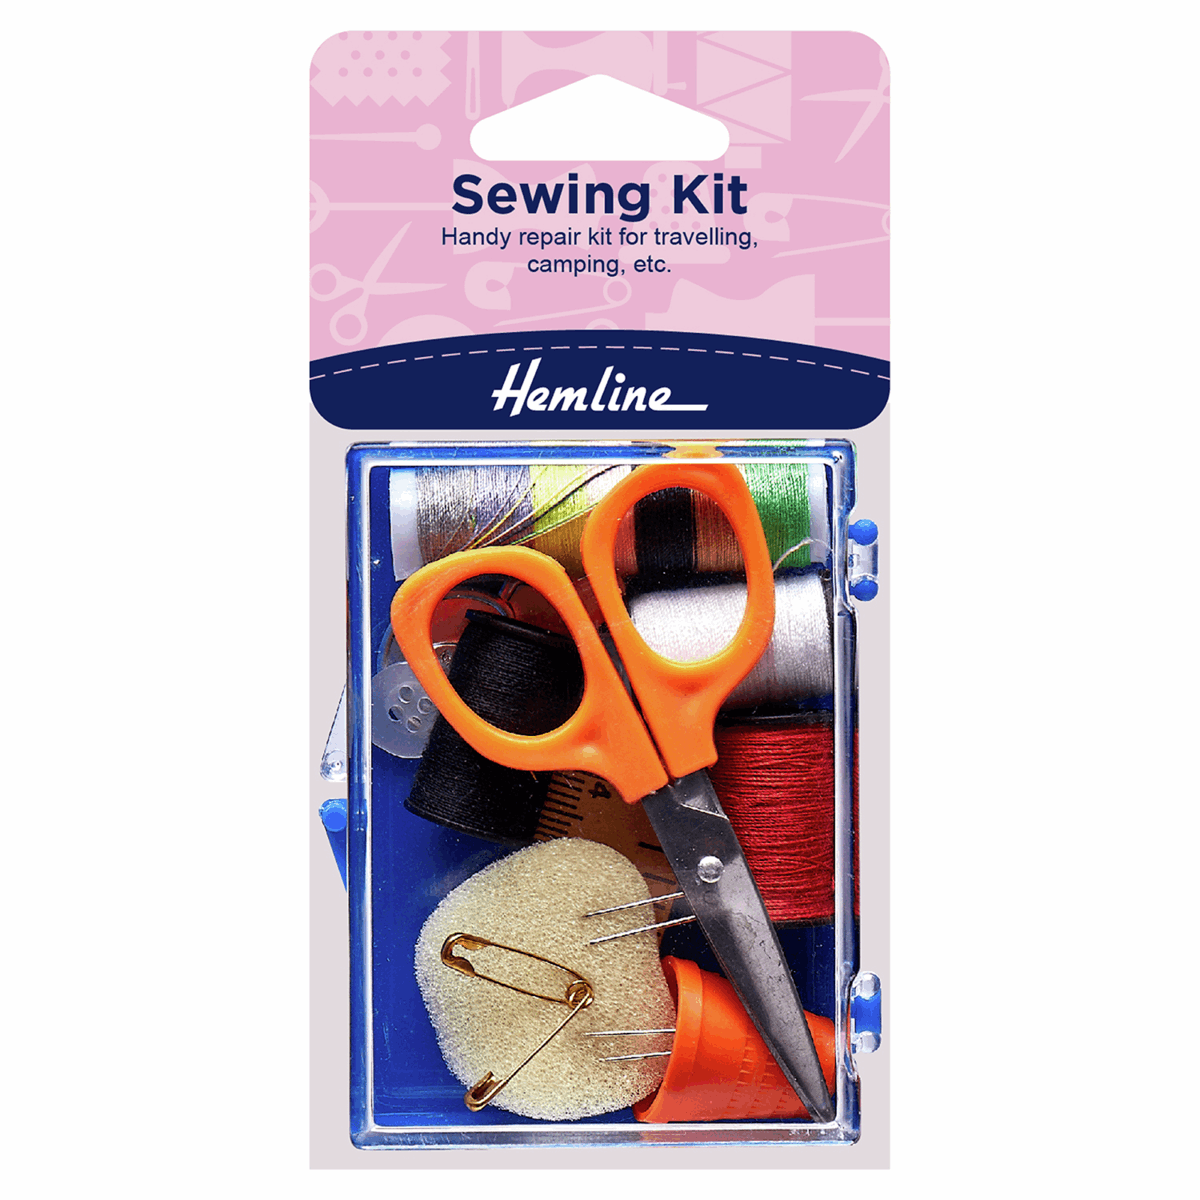 Hemline Handy Travel Sewing Kit